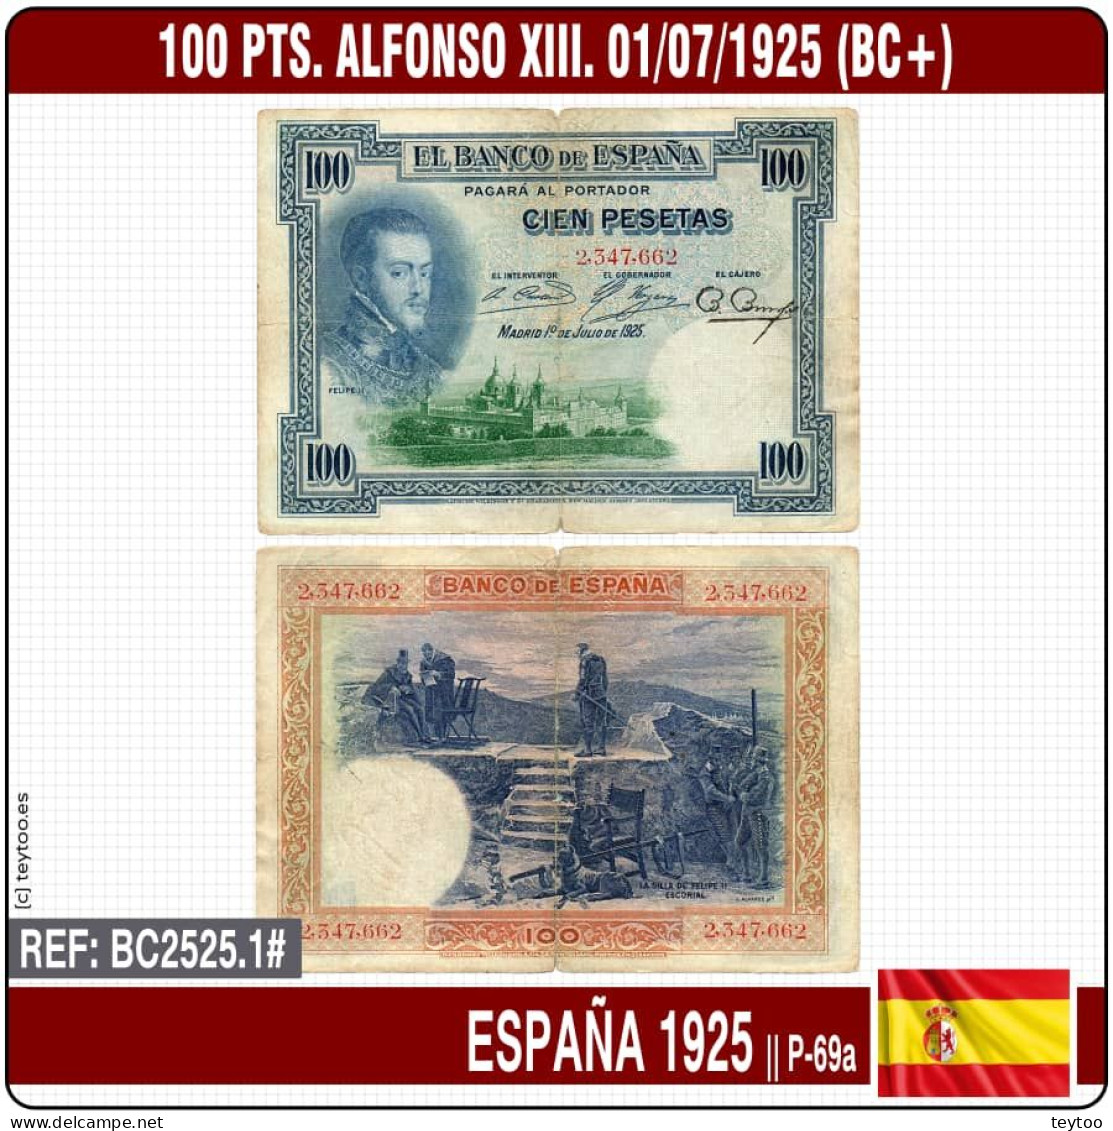 C2525.1# España 1925. 100 Pts. Alfonso XIII. Felipe II (BC) P-69a - 100 Pesetas